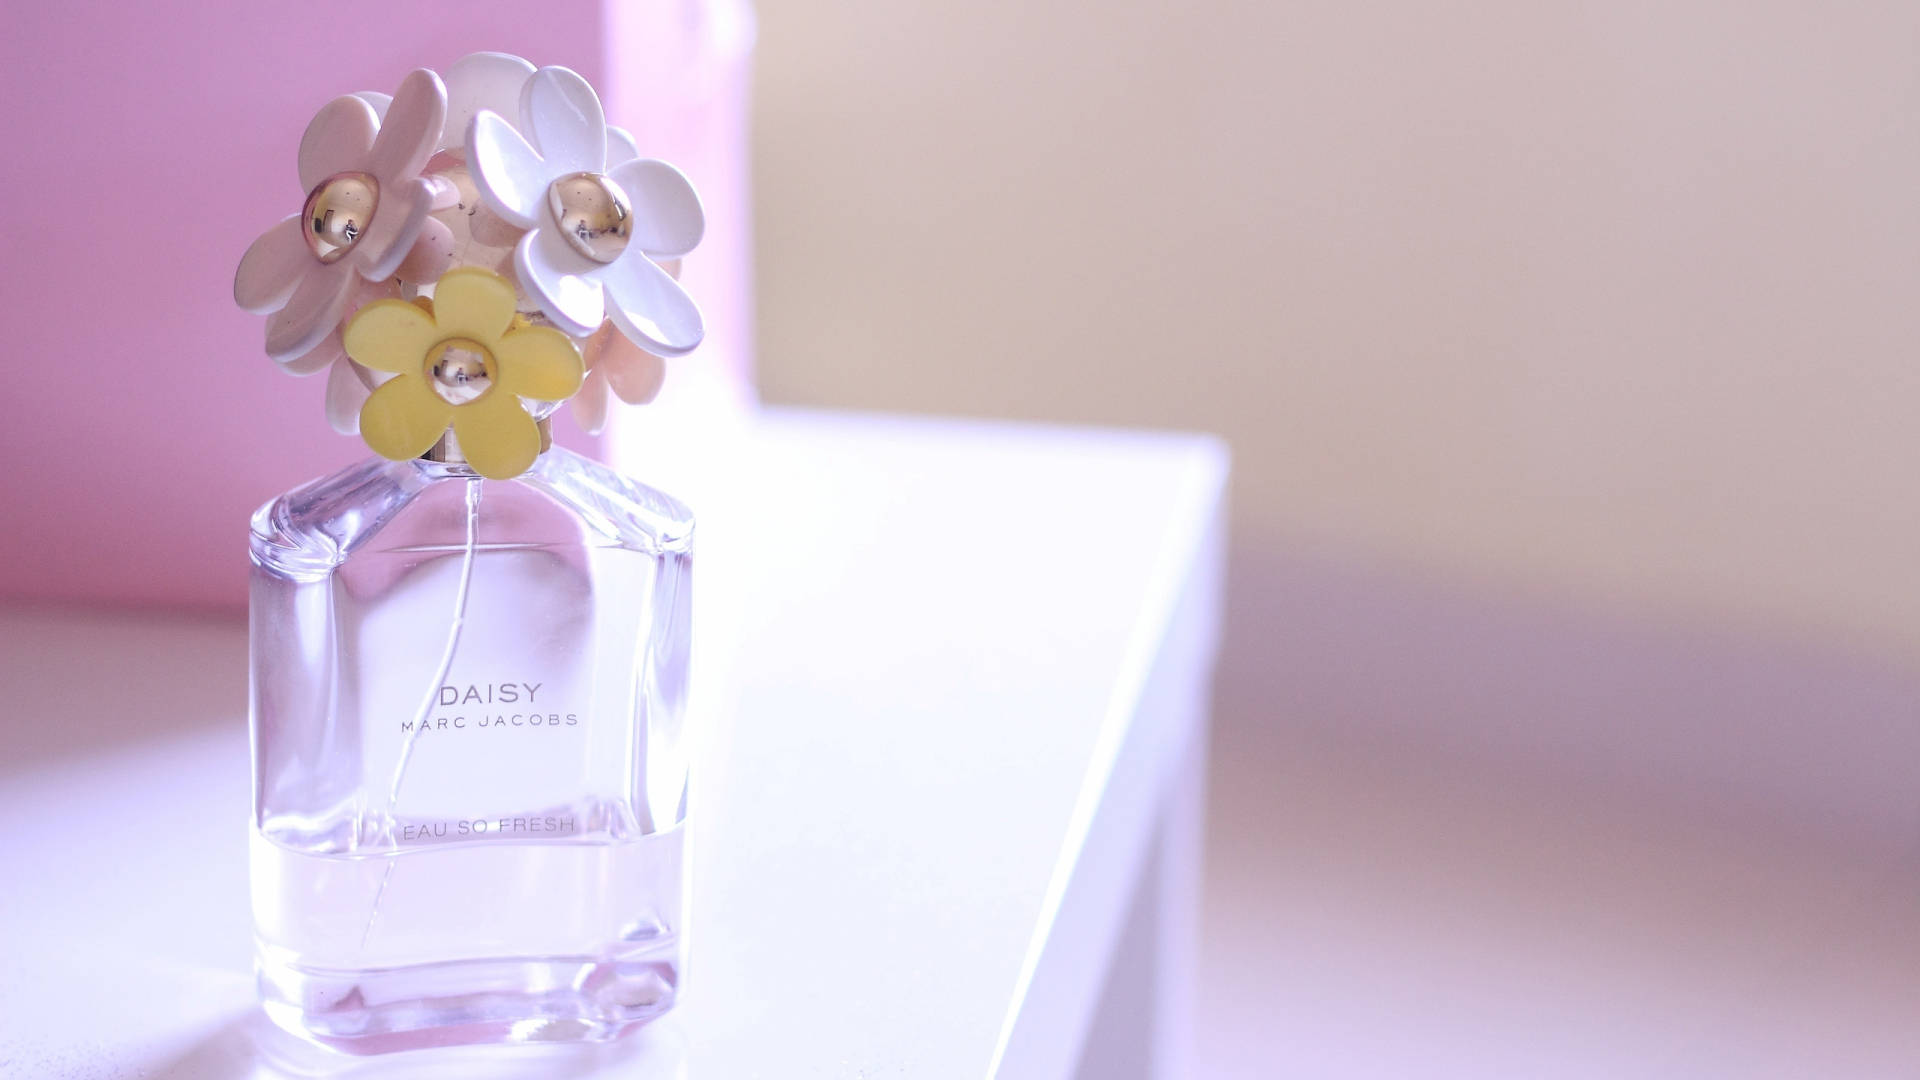 Marc Jacobs Daisy Perfume Bottle